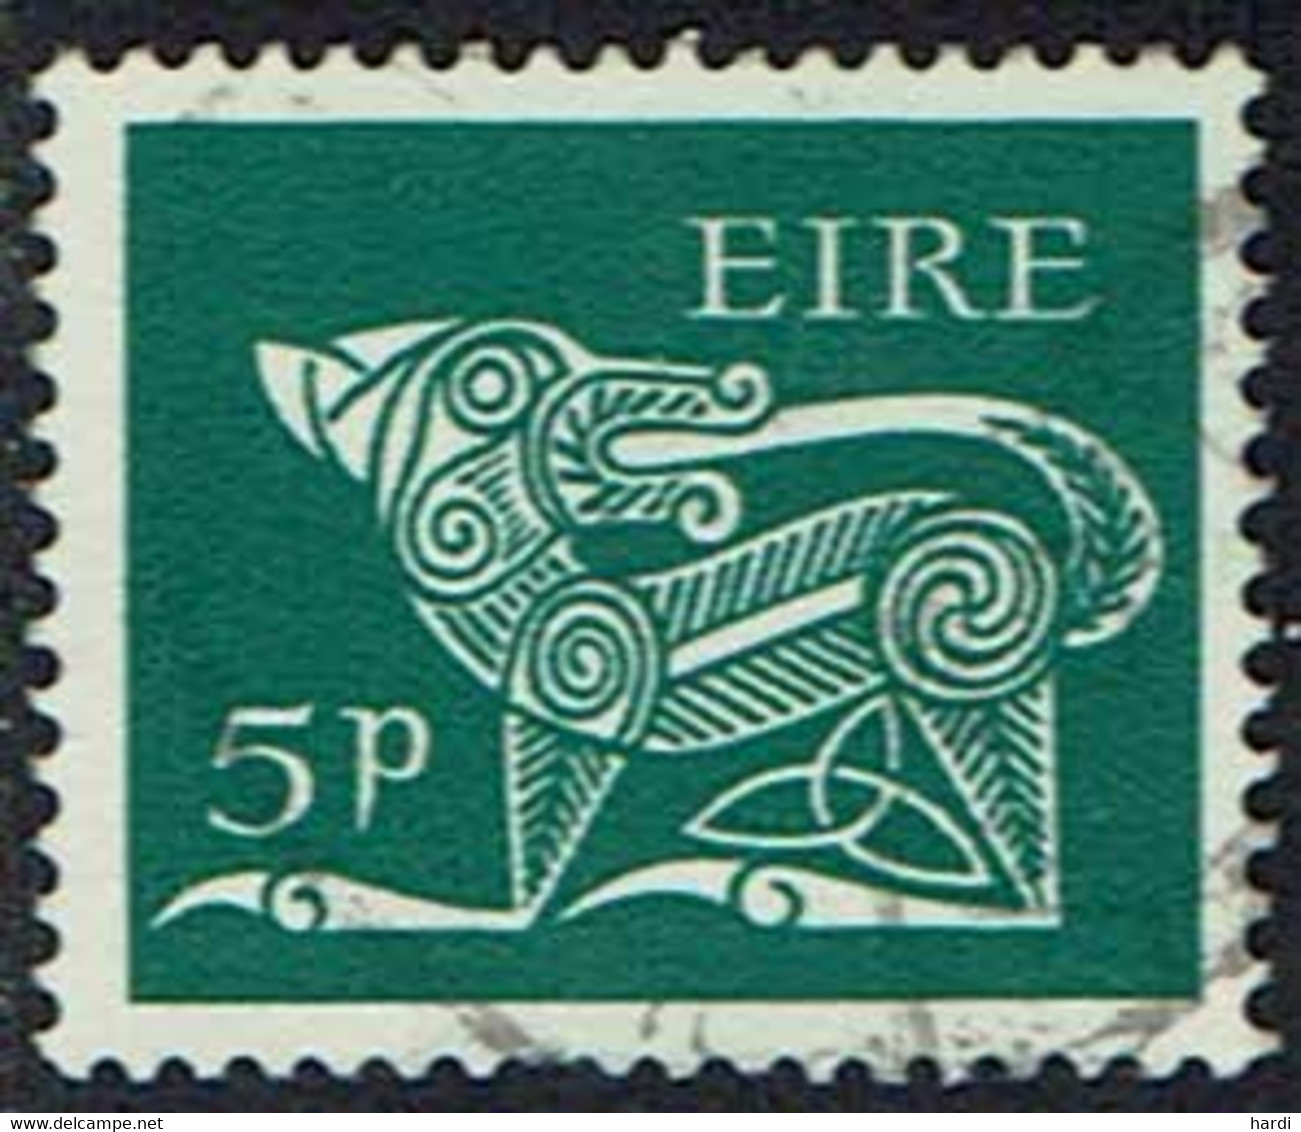 Irland 1968, MiNr 215, Gestempelt - Usati